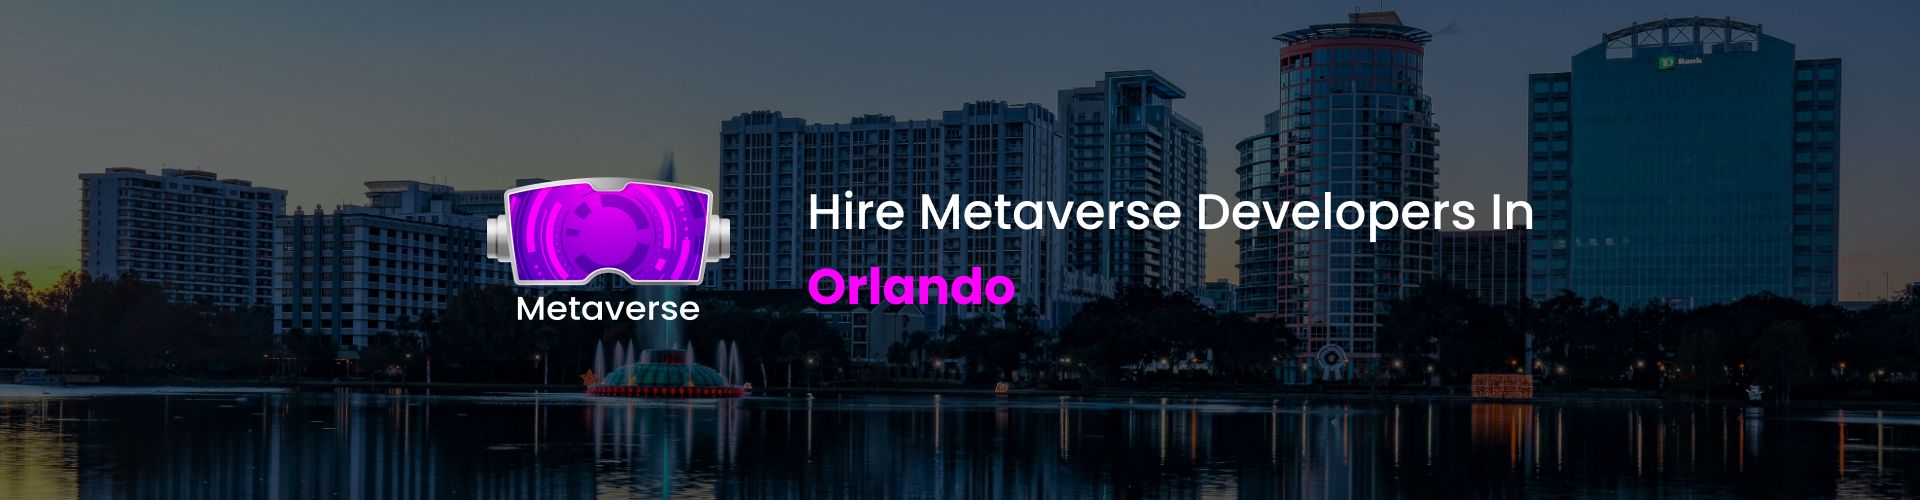 hire metaverse developers in orlando